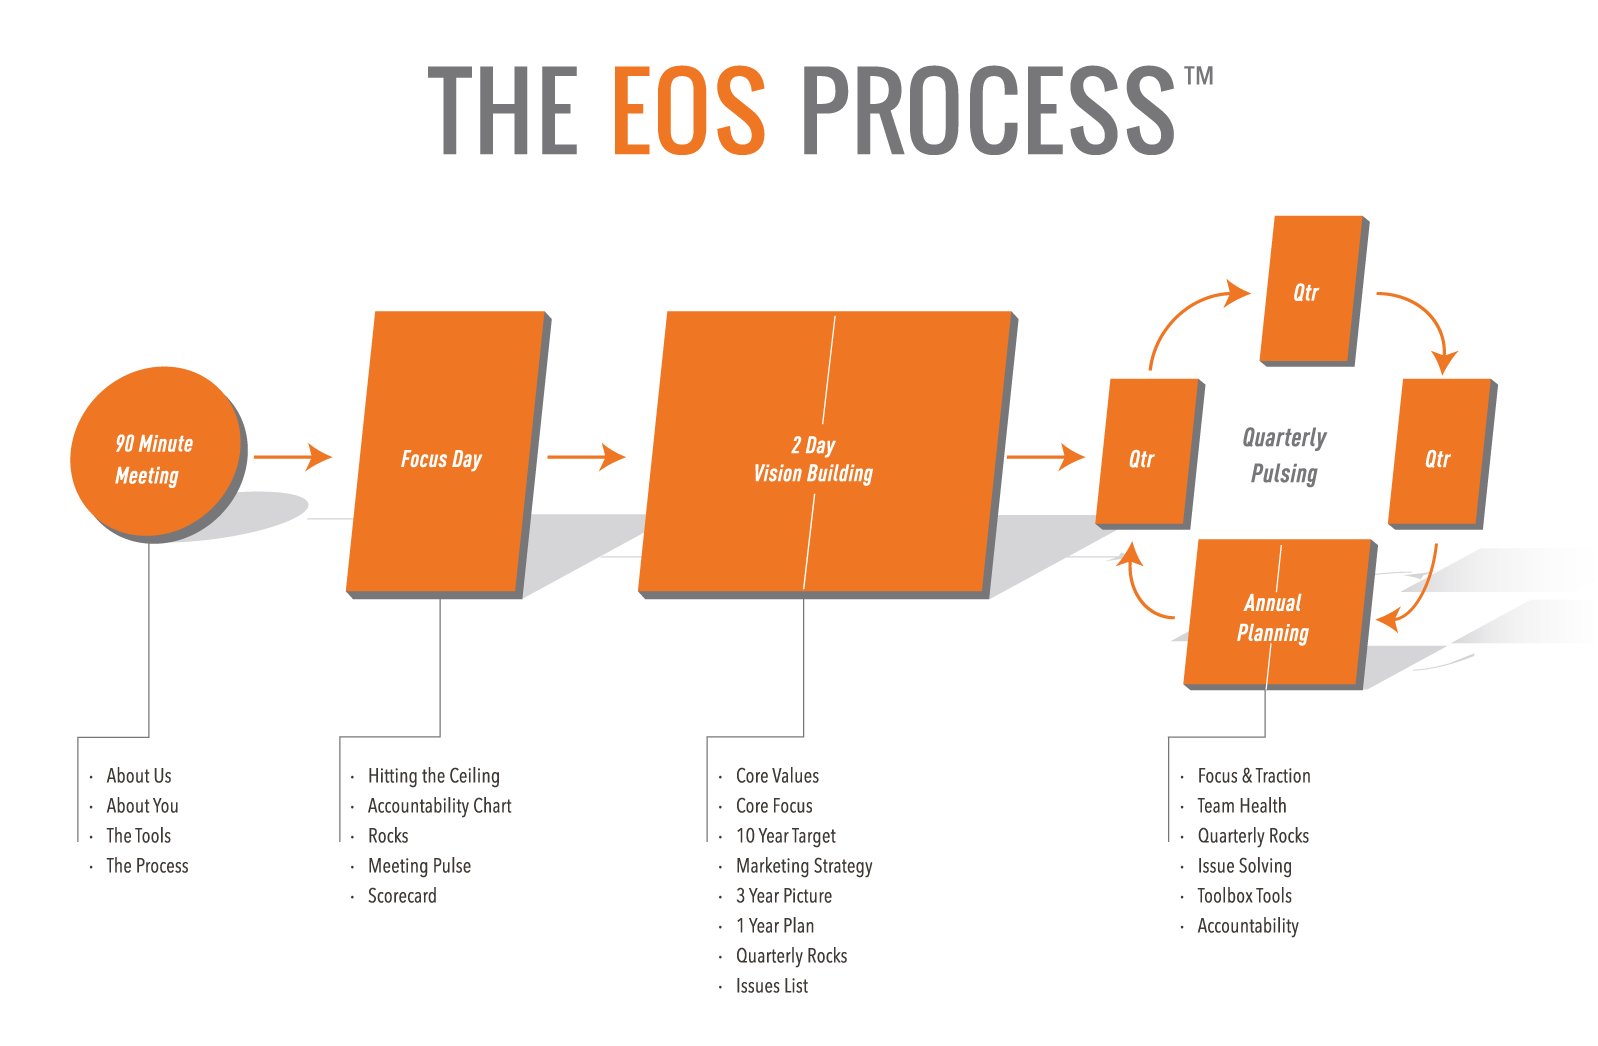 The EOS Process